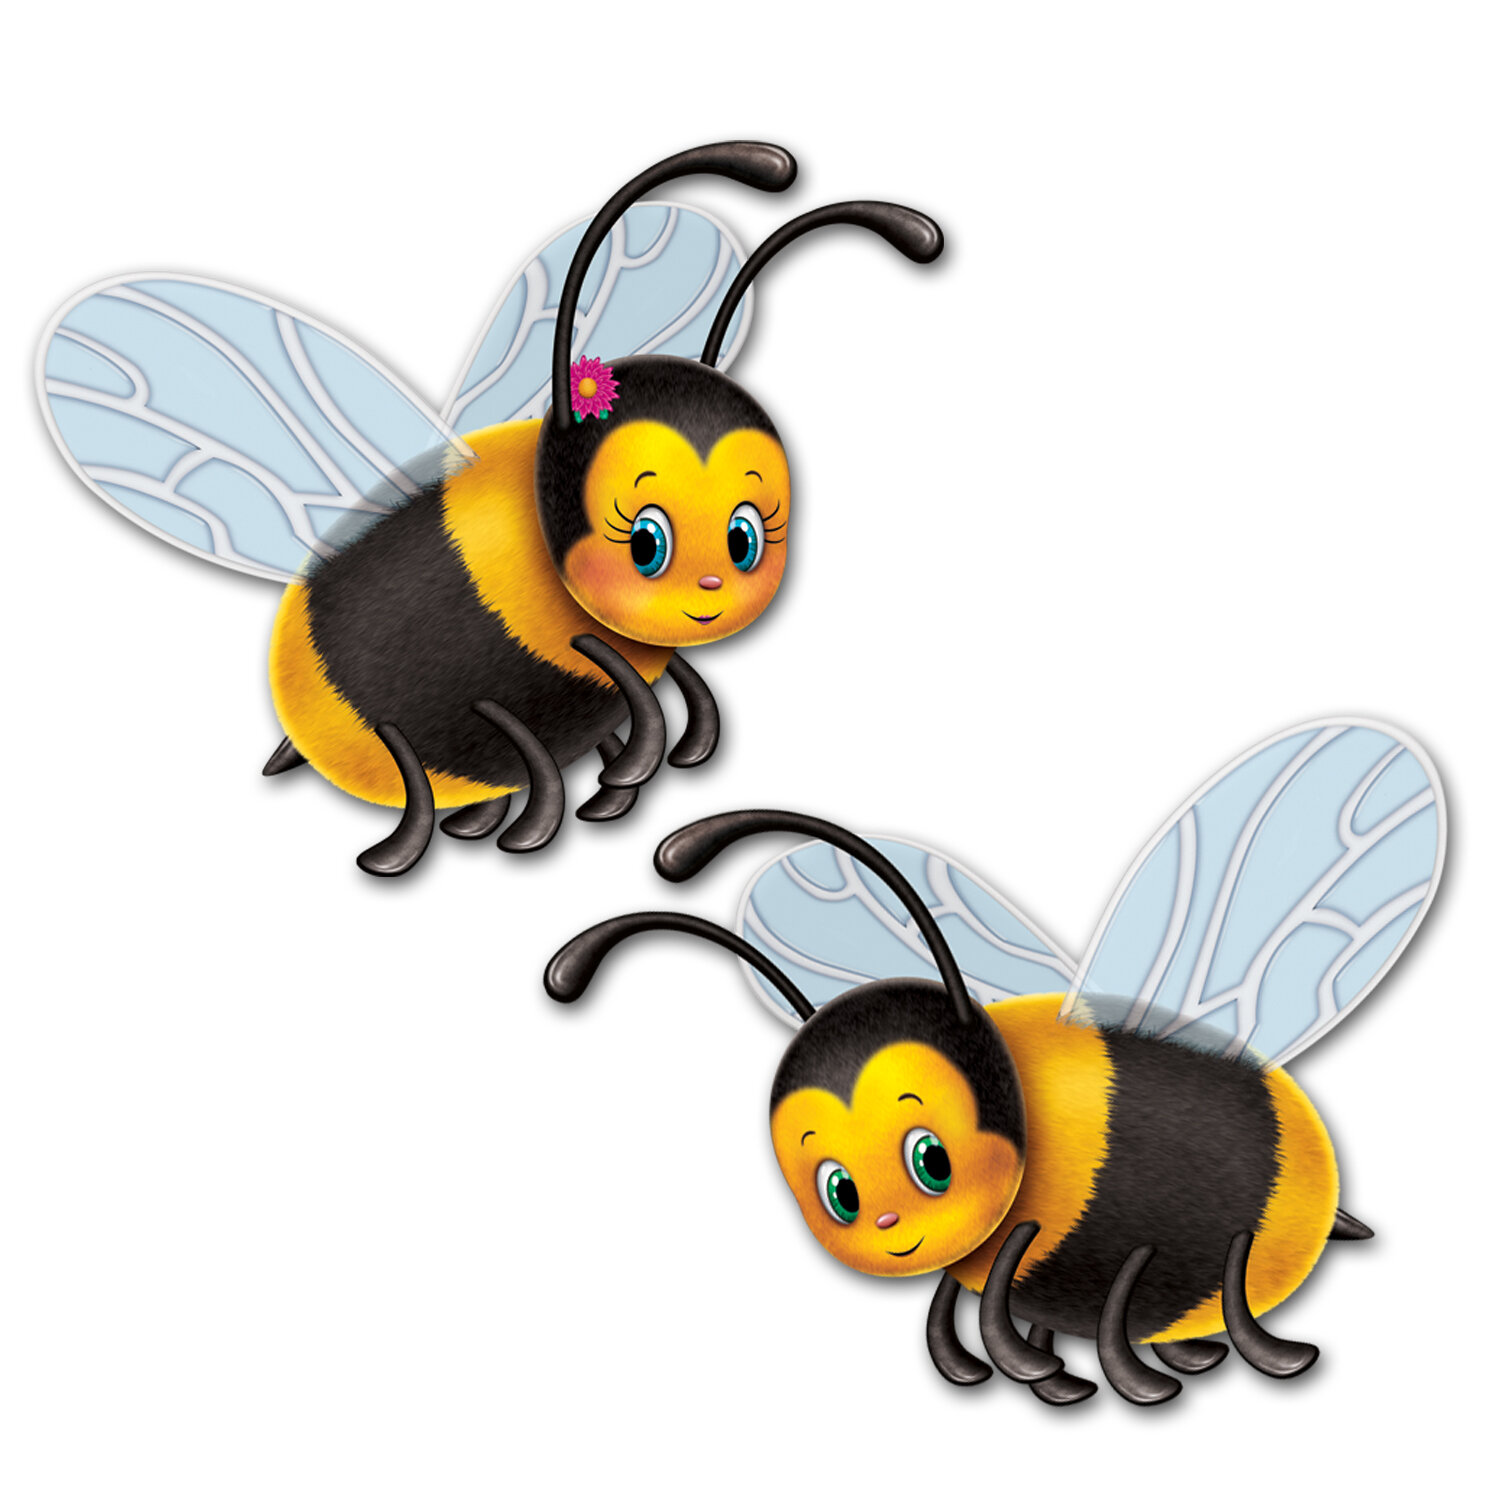 Bumblebee Life-Size Cardboard Cutout